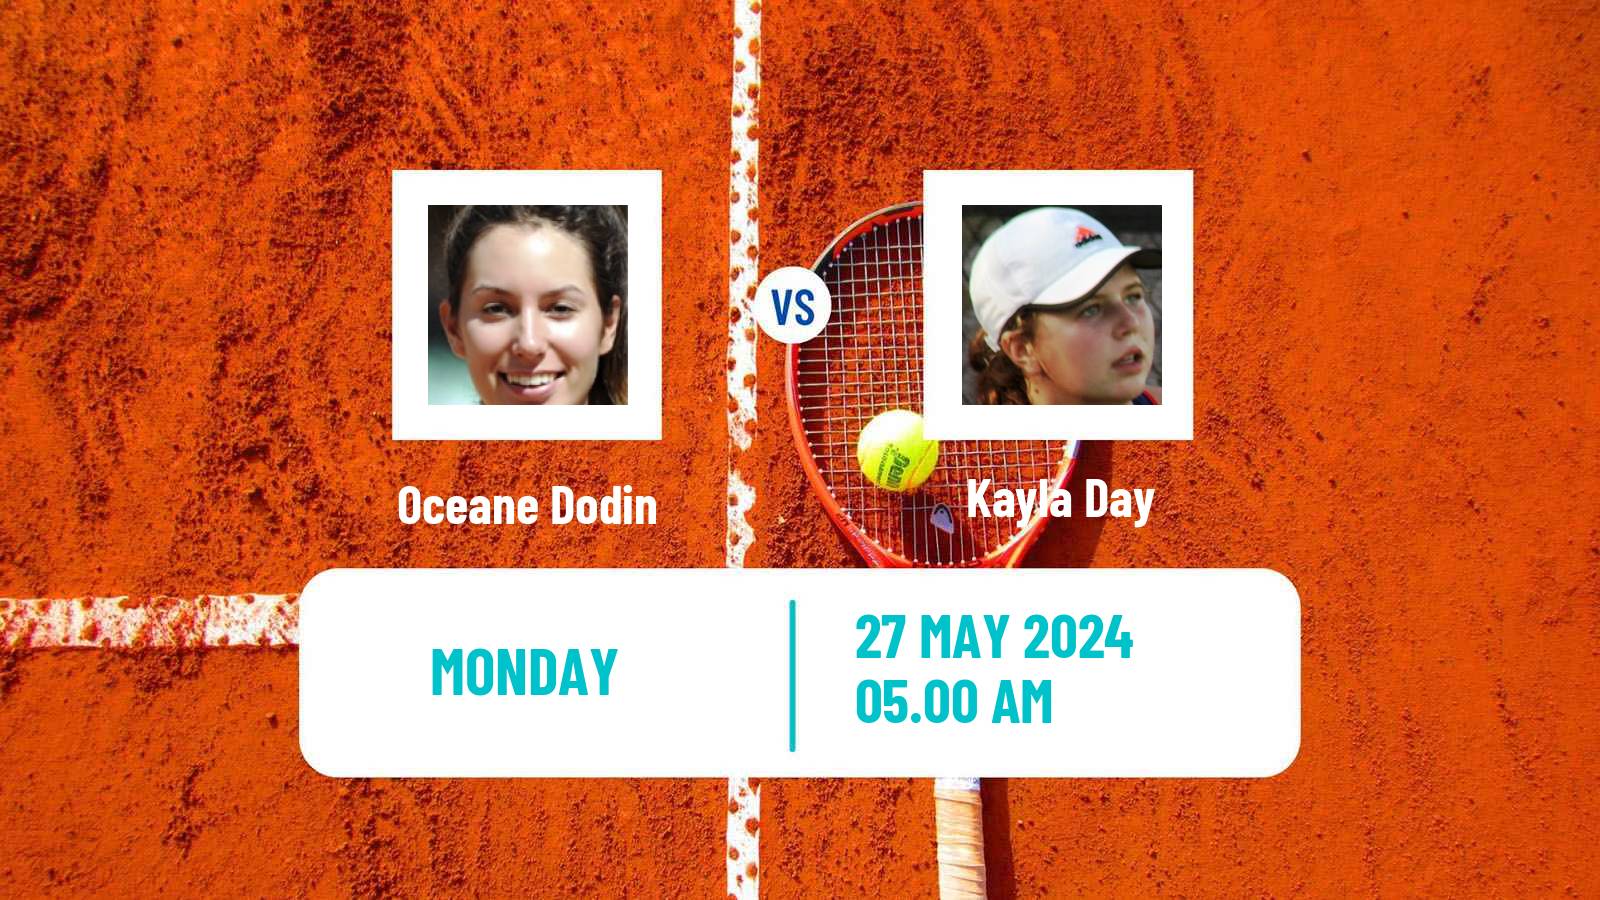 Tennis WTA Roland Garros Oceane Dodin - Kayla Day